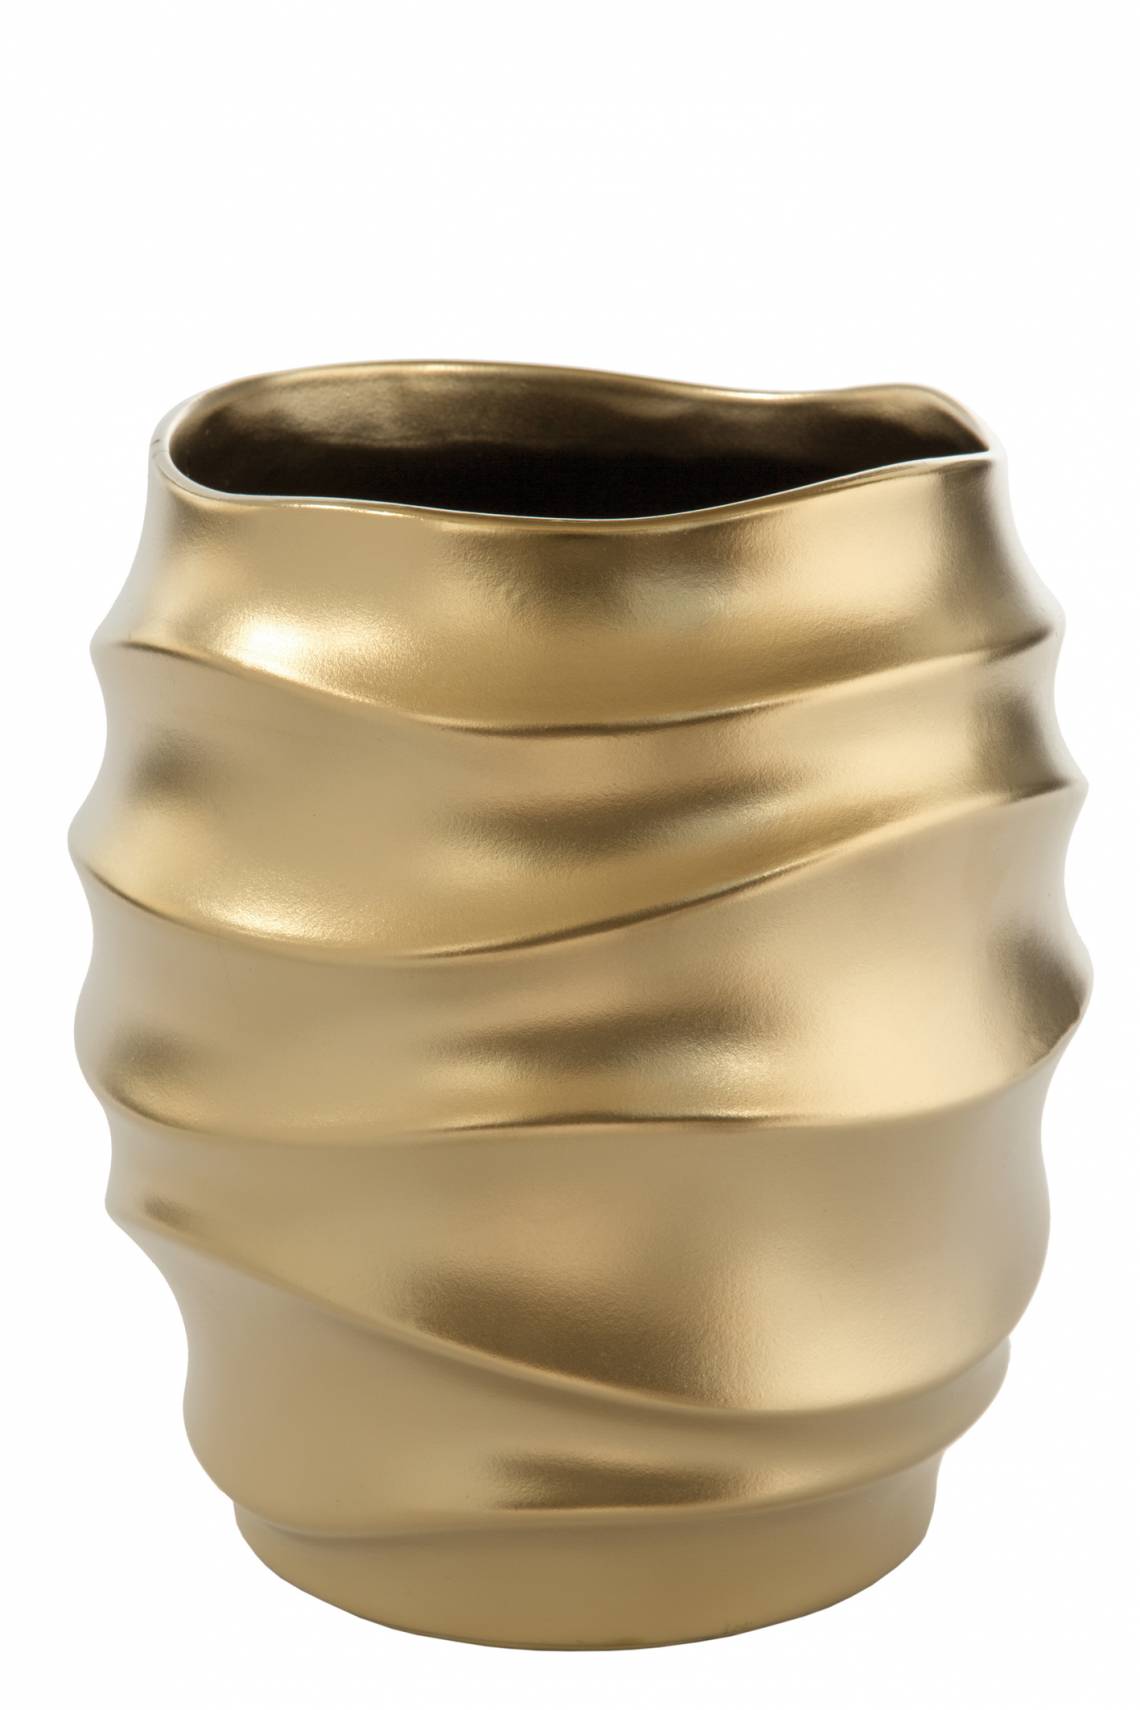 Fink Living FABIA / Vase-Übertopf, Keramik, goldfarben 127719 | TrendXPRESS